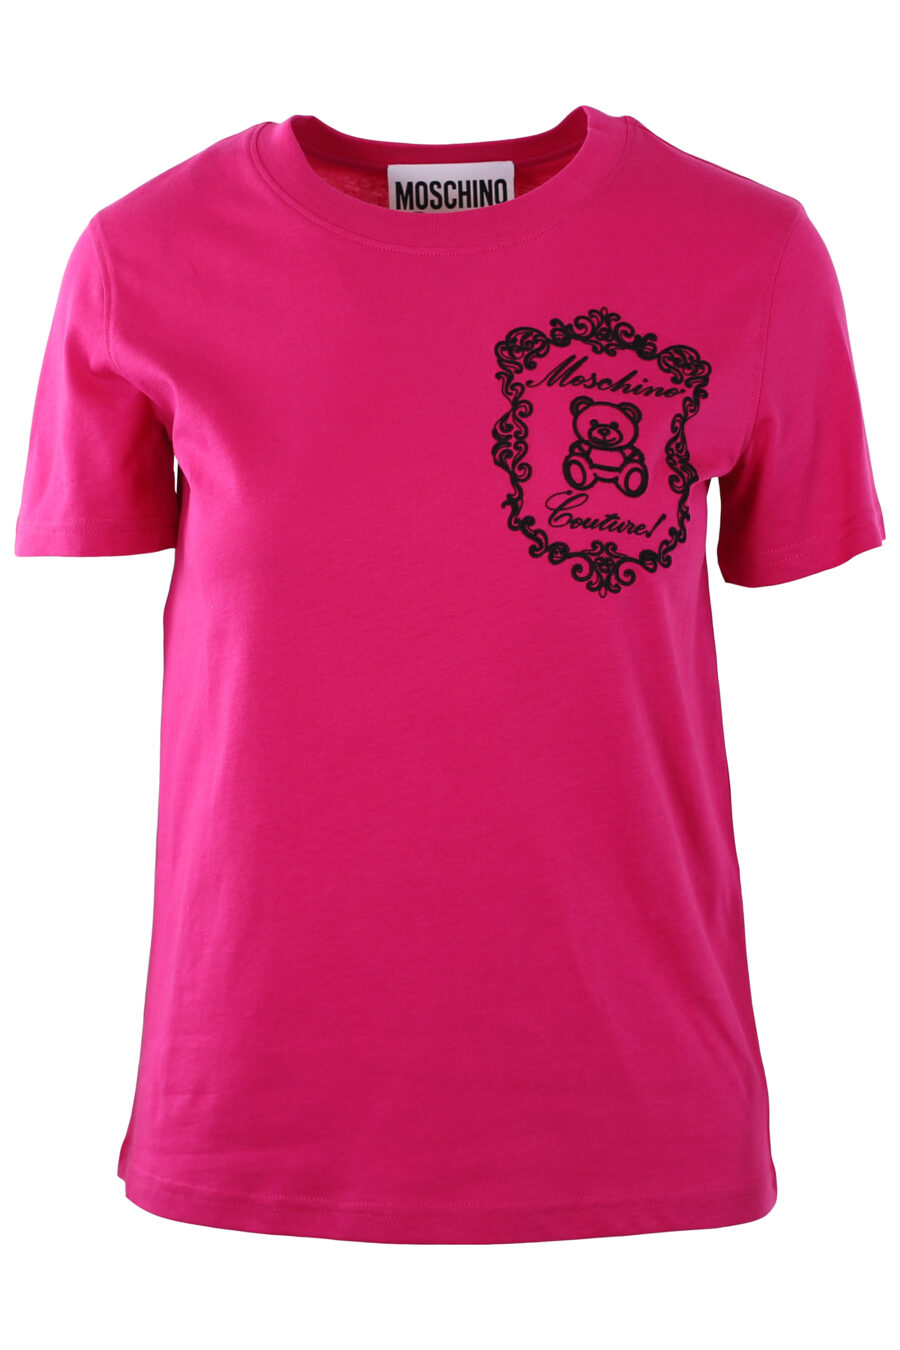 Fuchsia T-shirt with bear shield logo - IMG 0244